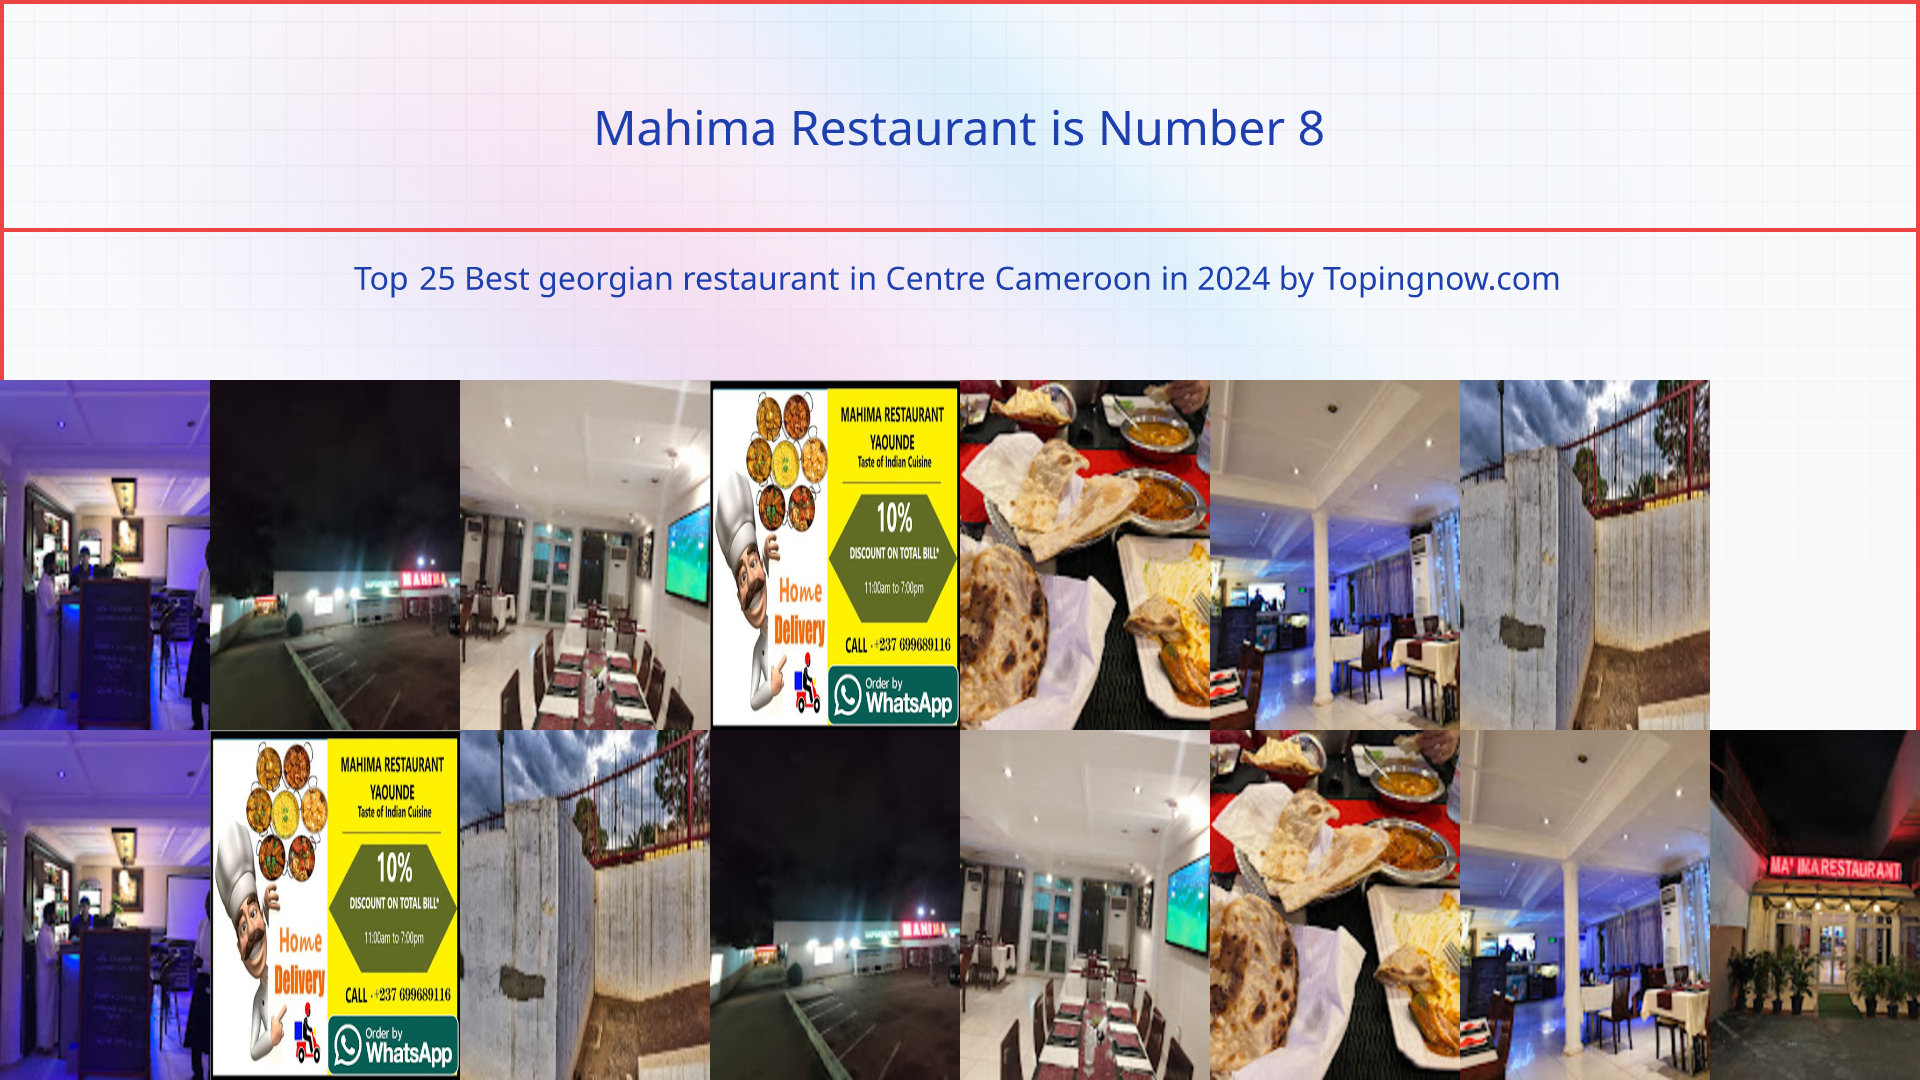 Mahima Restaurant: Top 25 Best georgian restaurant in Centre Cameroon in 2024